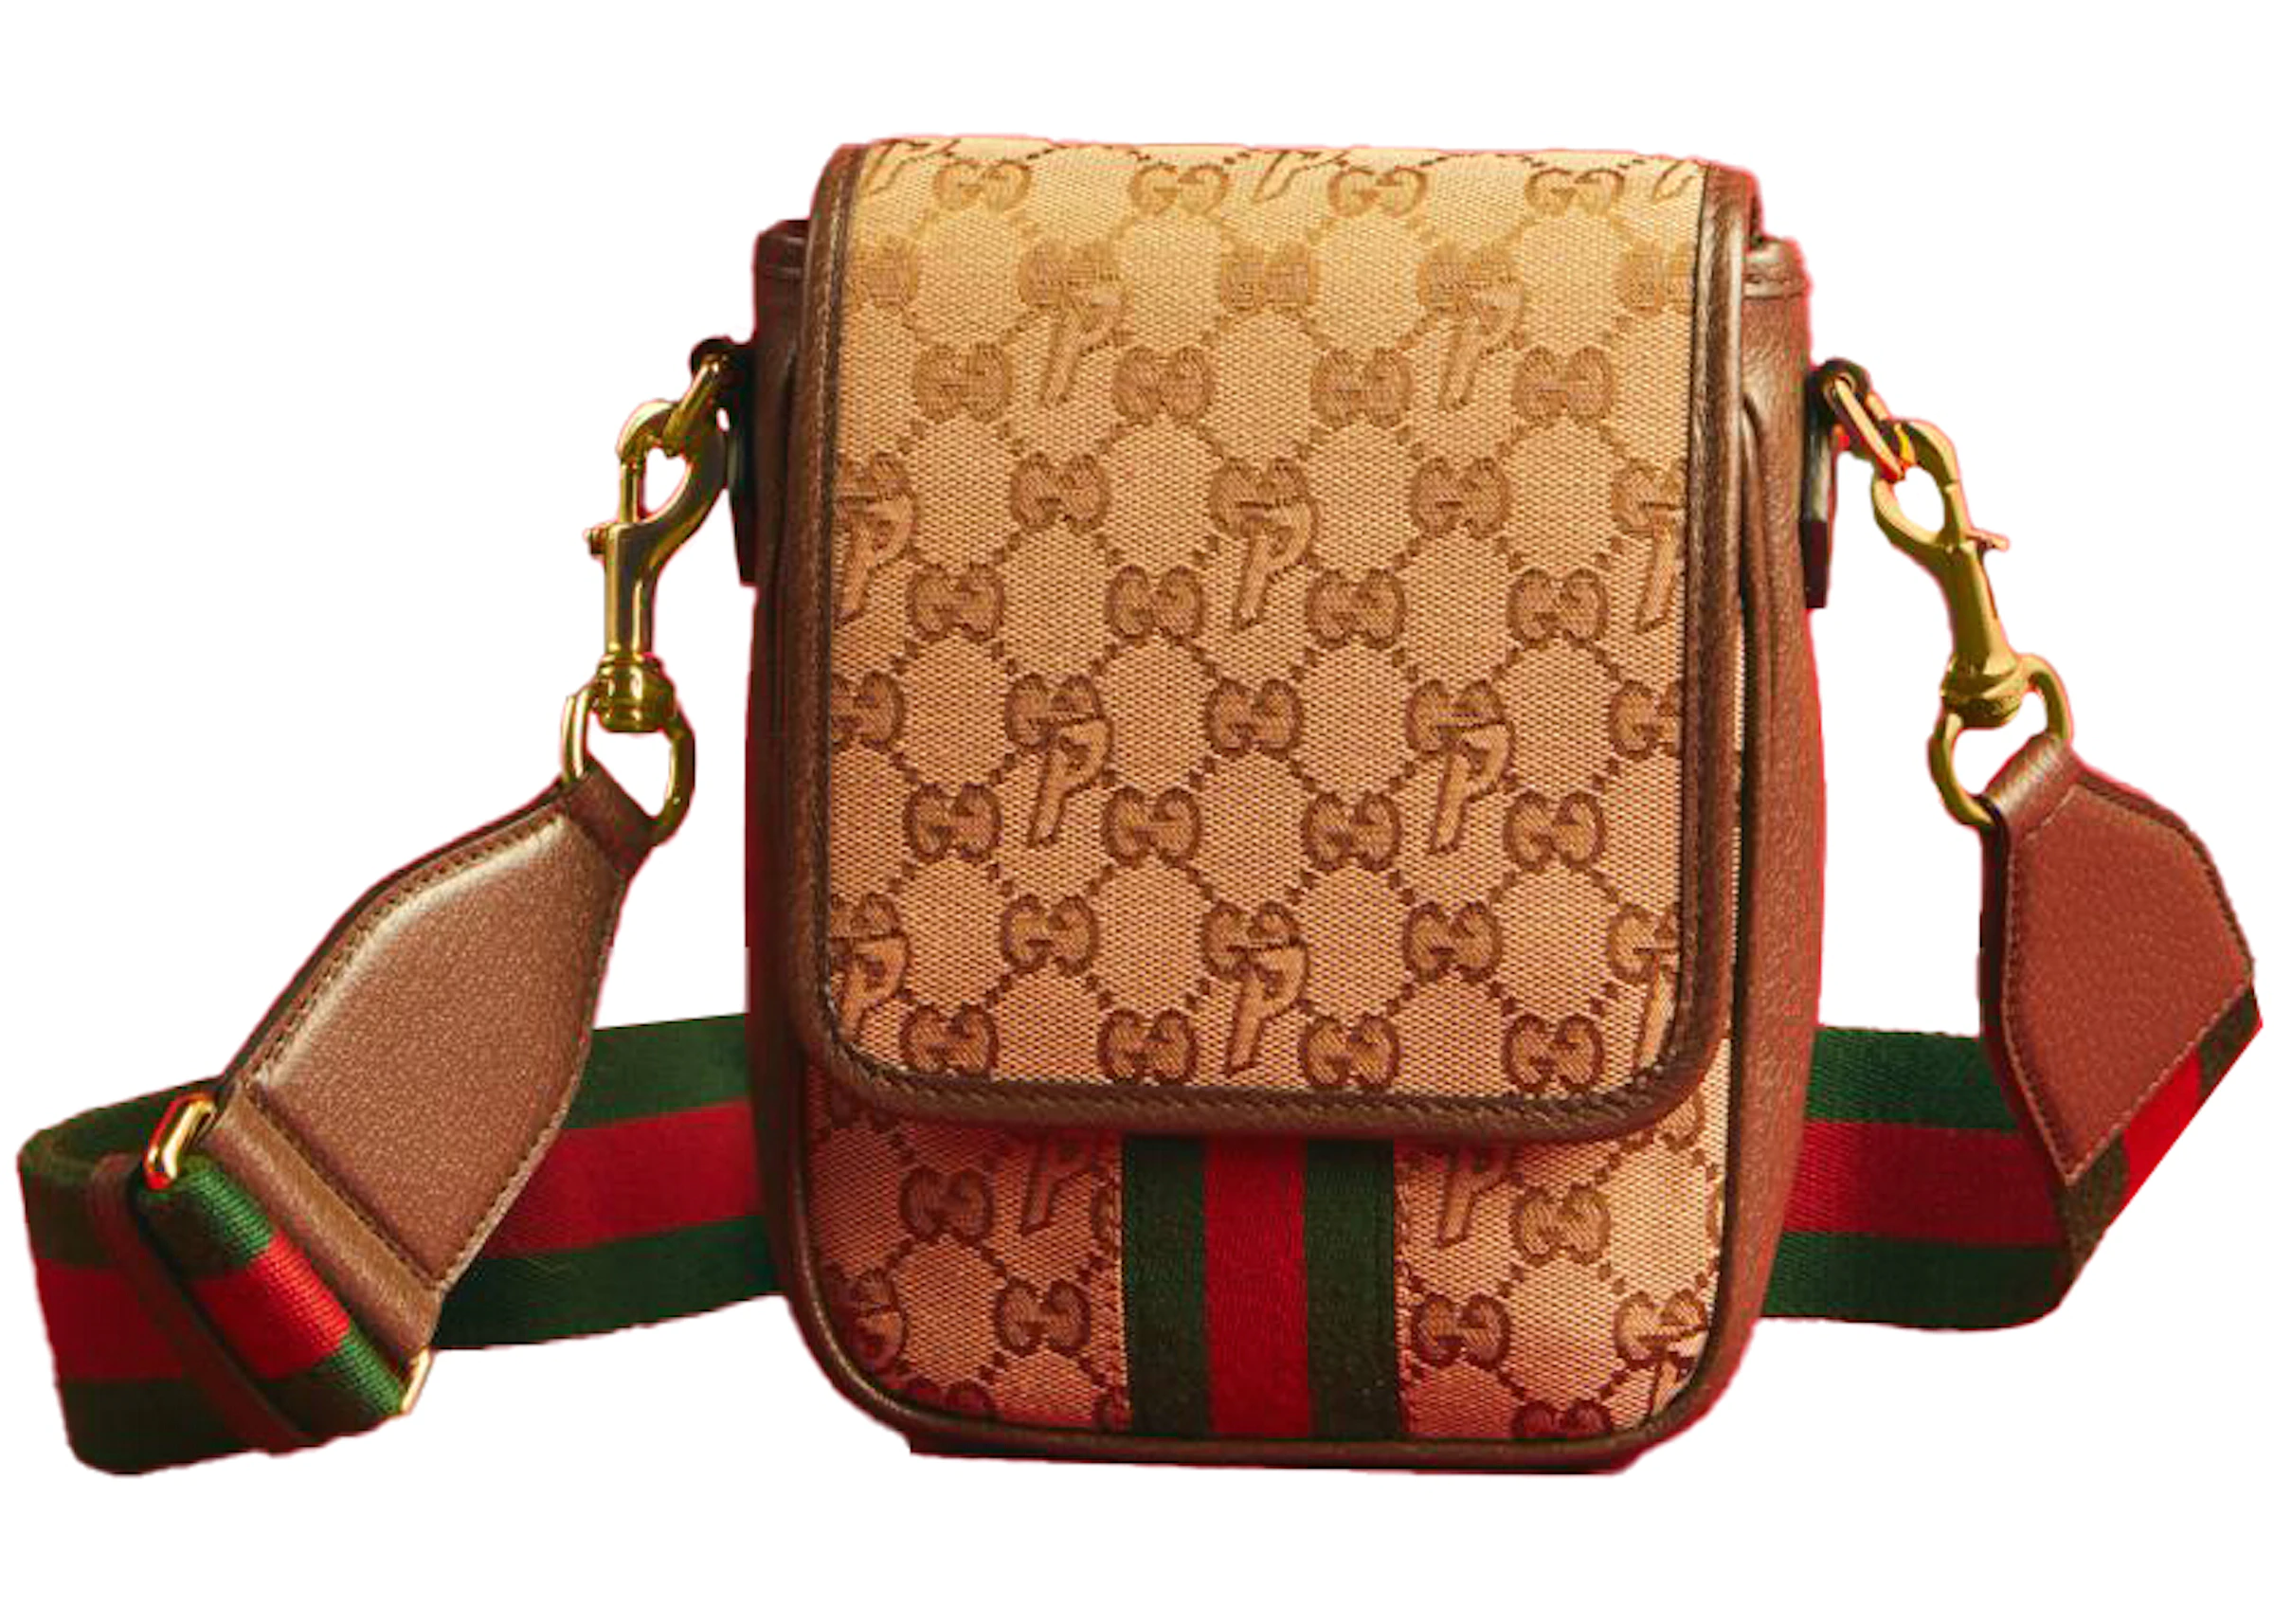 Verwarren Echter zien Palace x Gucci Web Canvas GG-P Messenger Bag Beige in GG Supreme Canvas/Leather  with Gold-tone - US